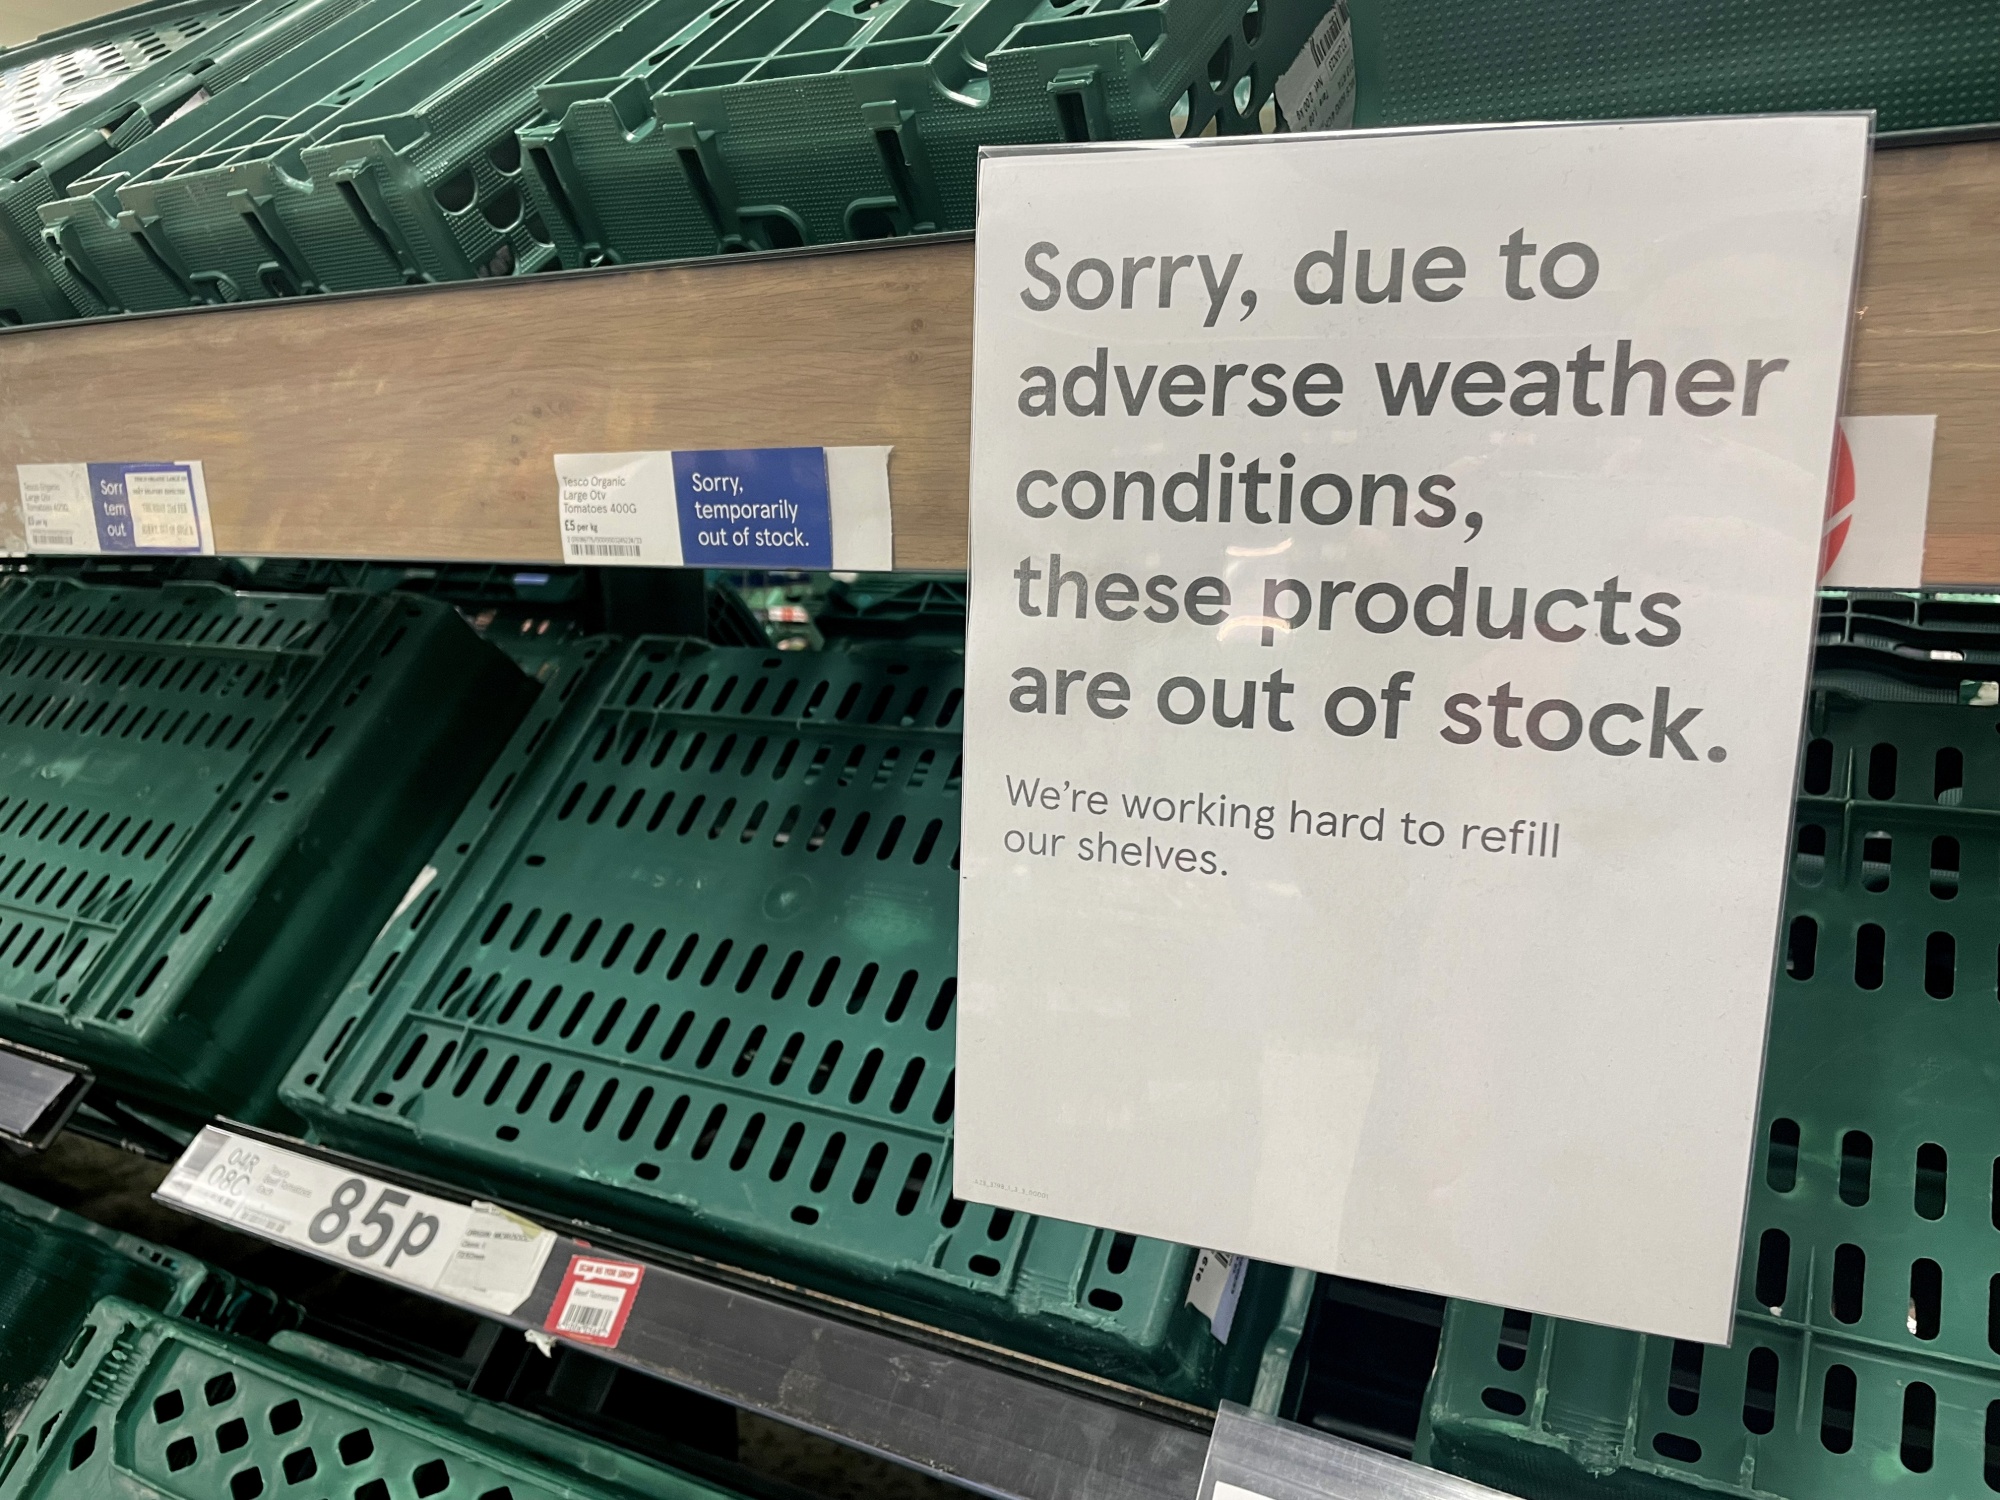 UK supermarkets Tesco, Aldi and Asda are rationing fruit and salad  vegetables